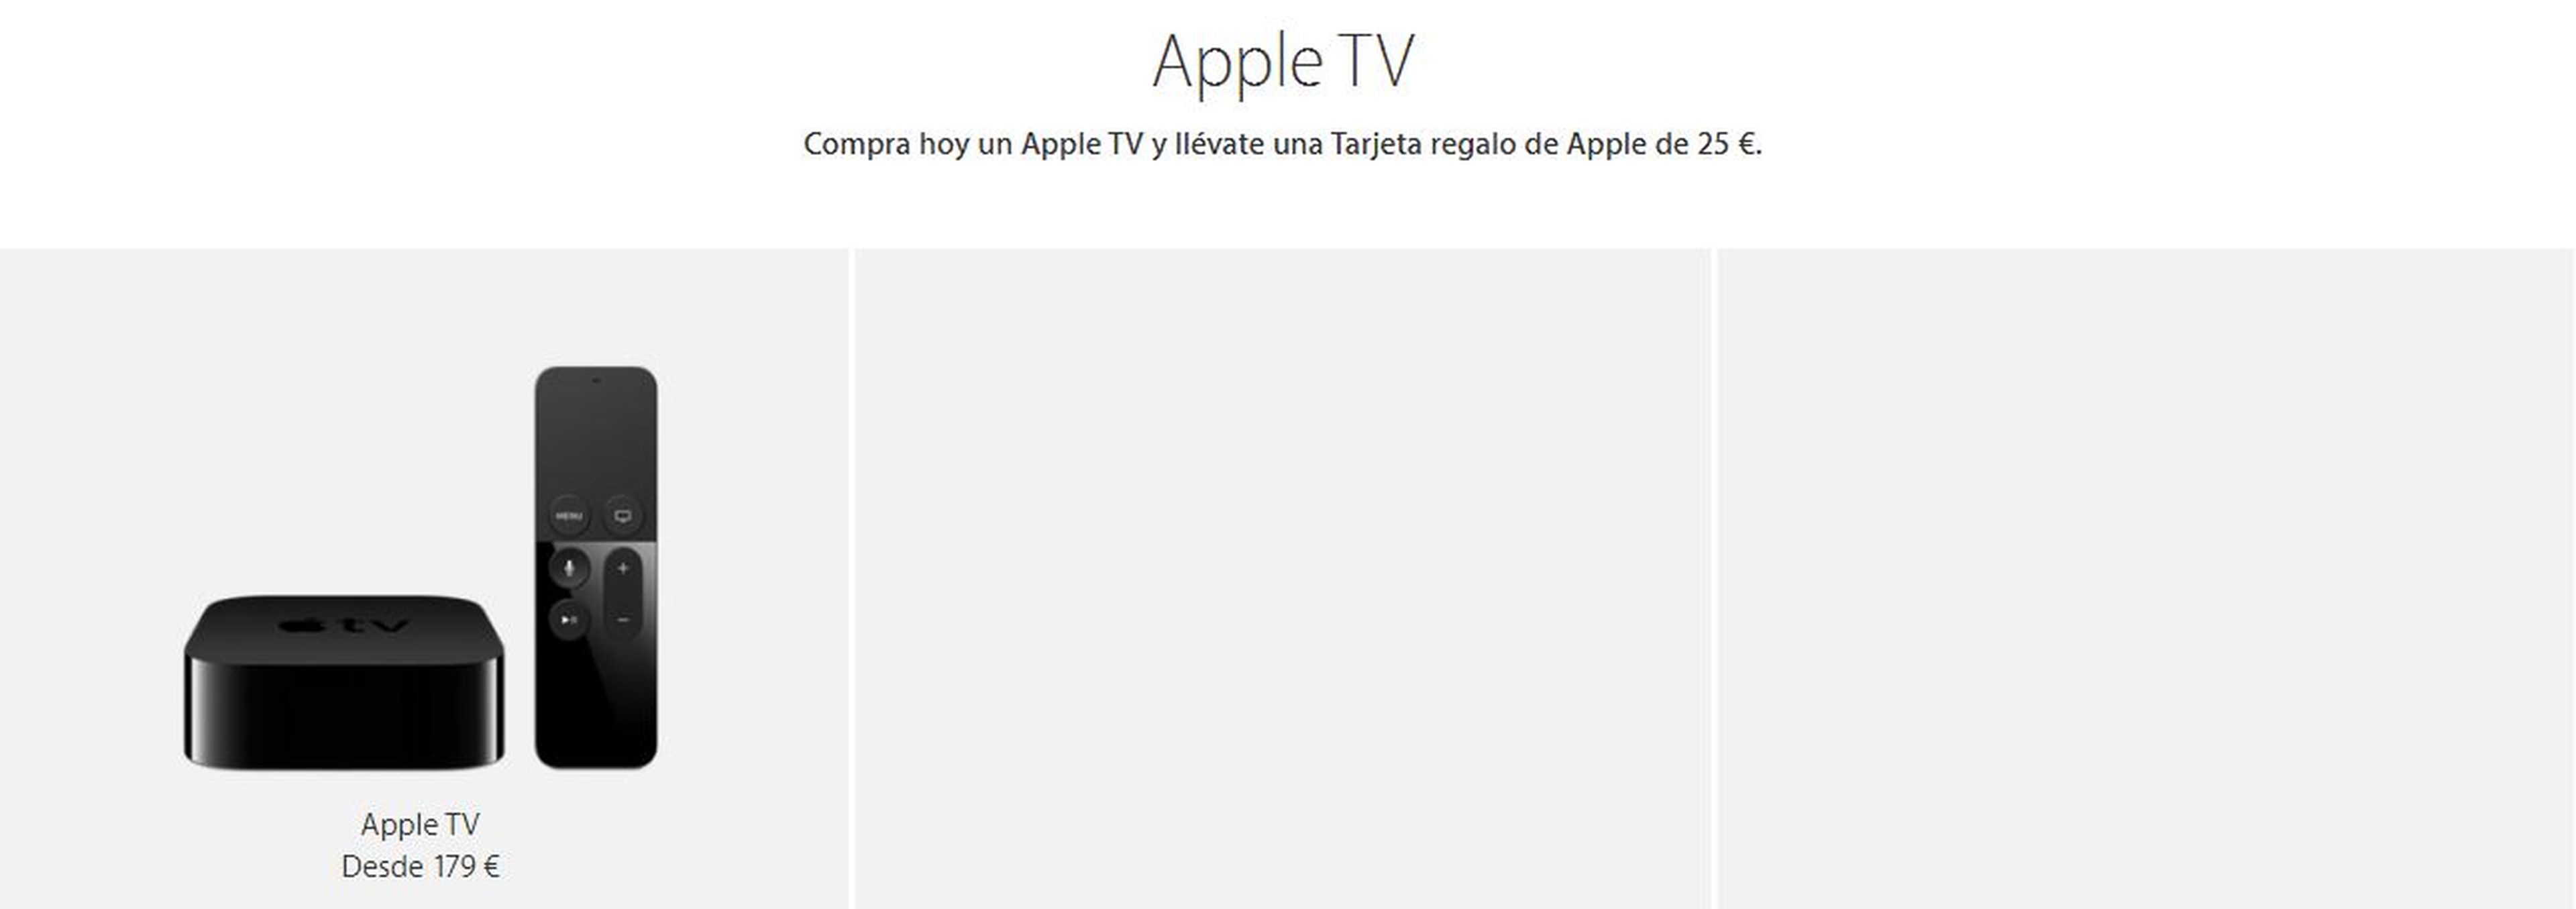 Ofertas en Apple TV